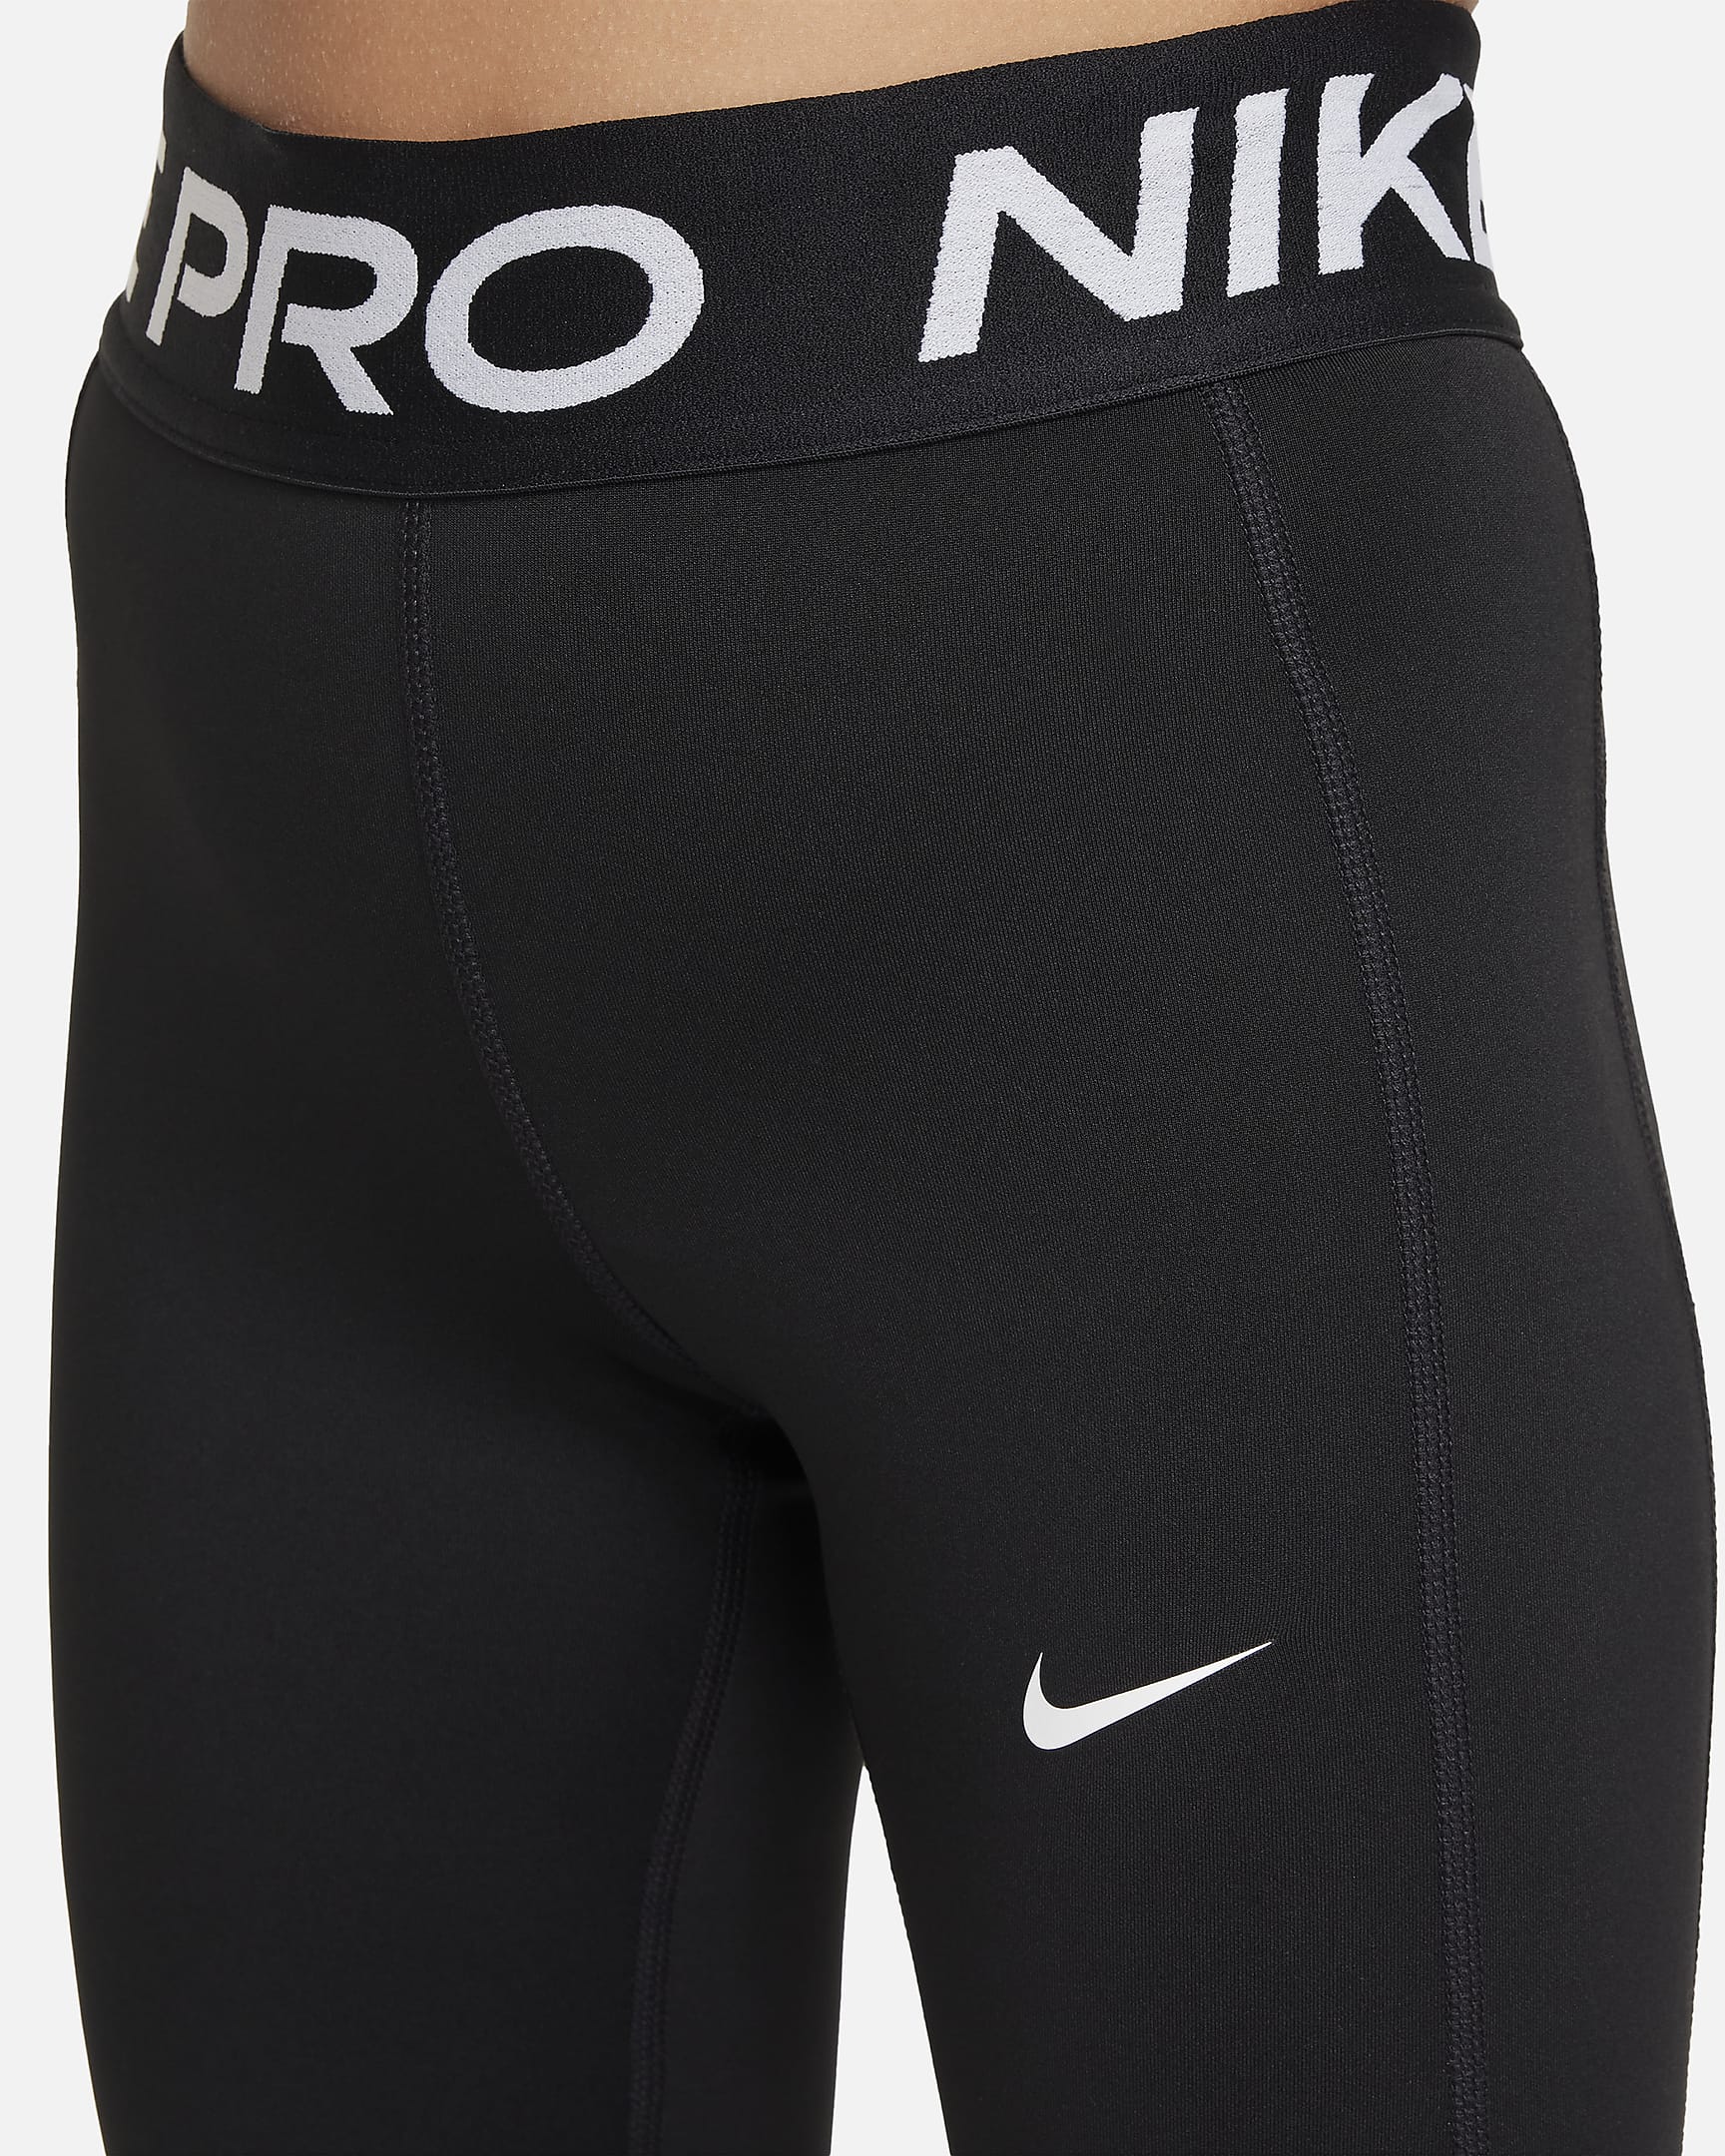 Leggings Dri-FIT Nike Pro Leak Protection: Period para rapariga - Preto/Branco